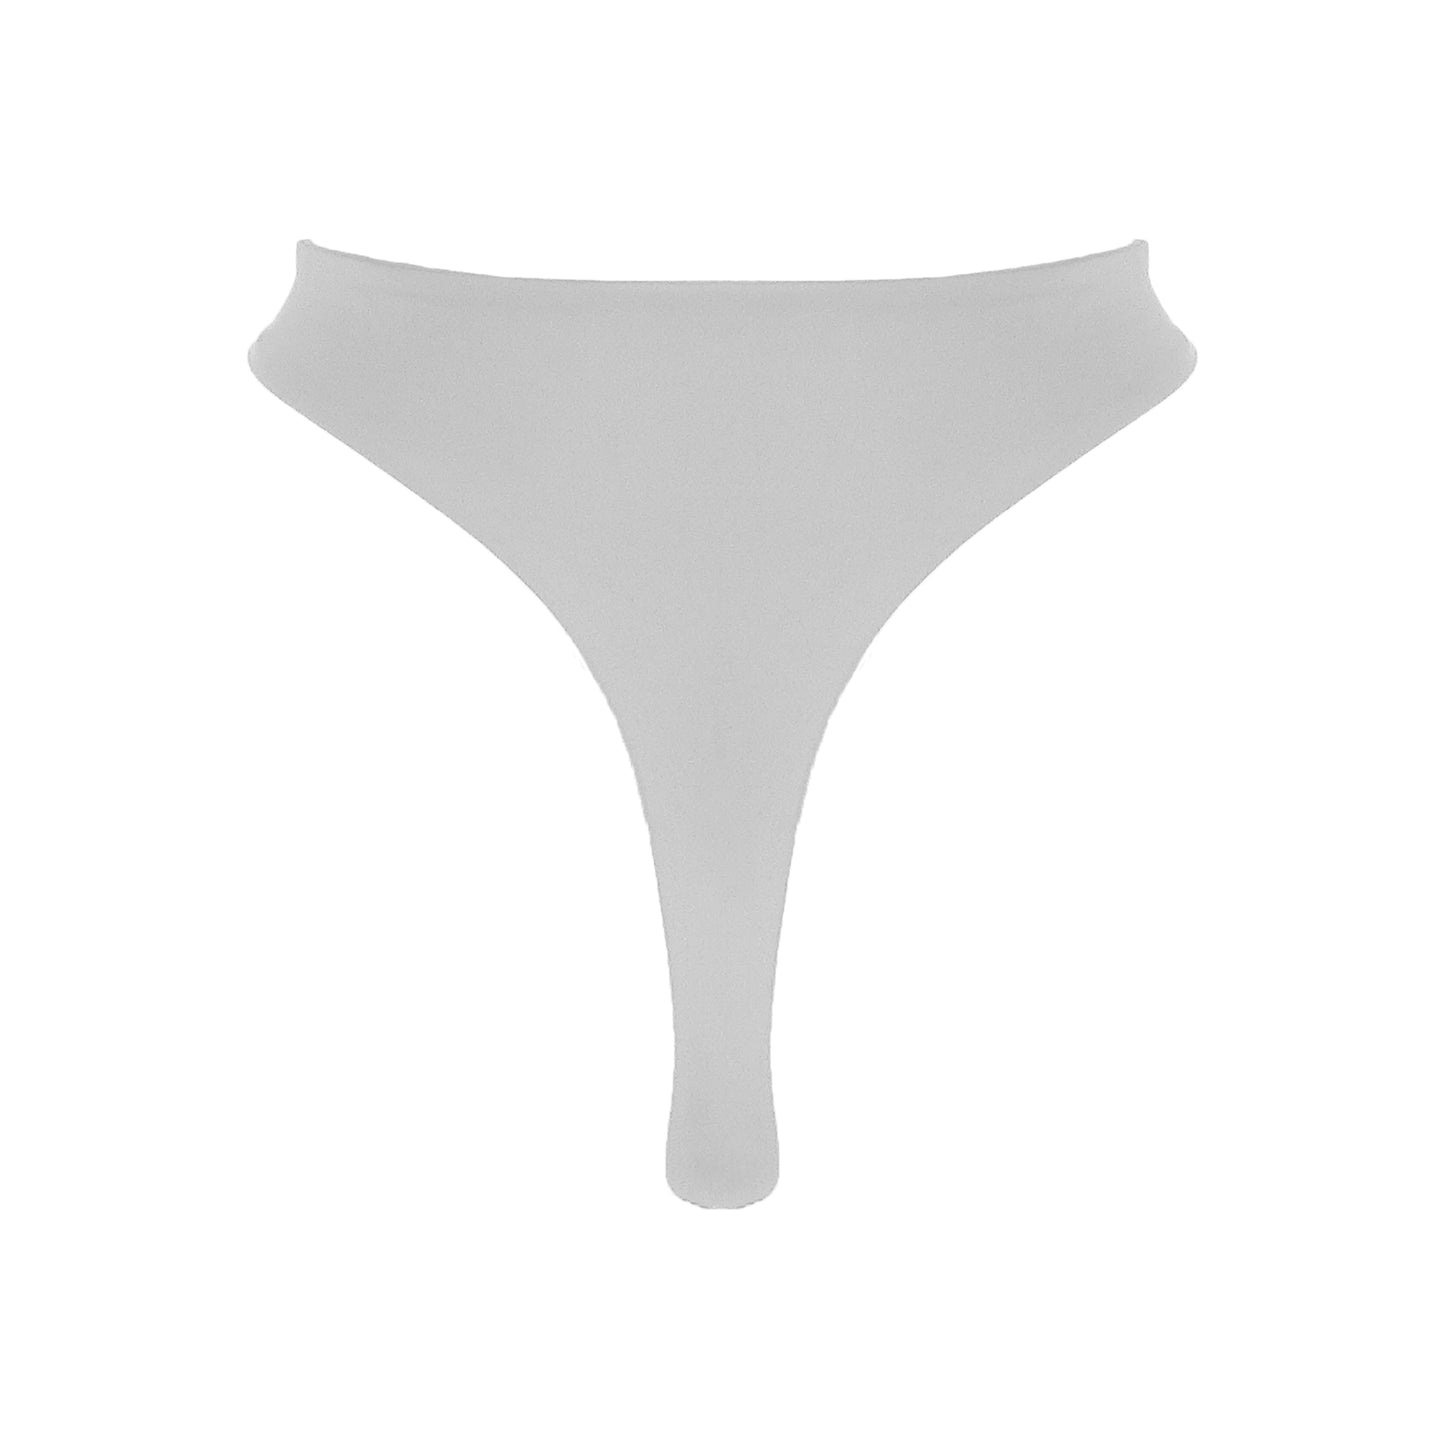 Back view of light grey High waist thong bikini bottom with high cut legs and thong bum coverage.